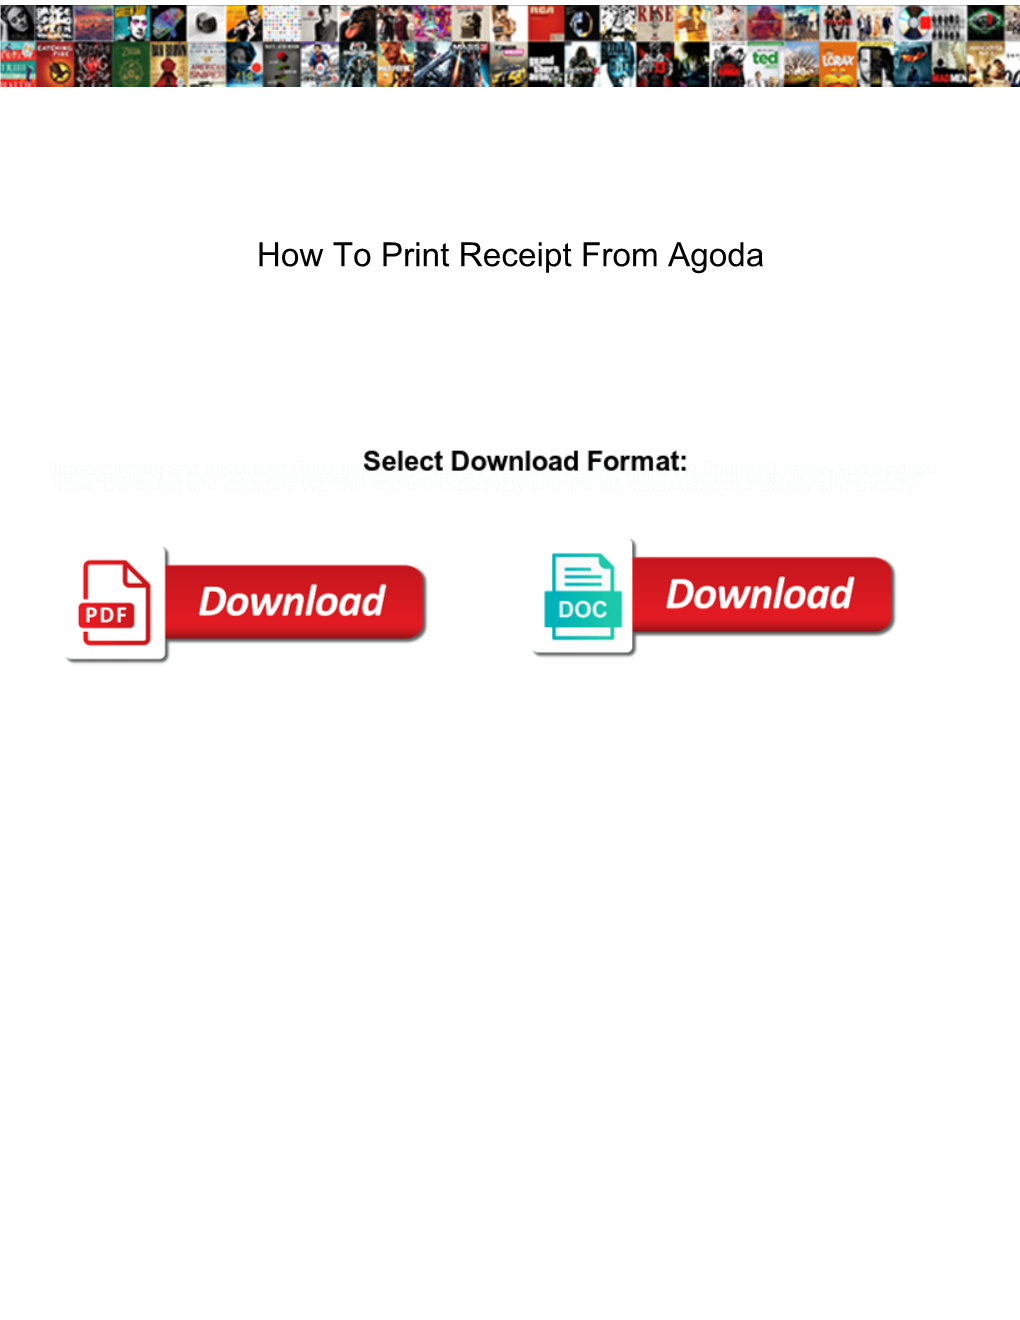 How to Print Receipt from Agoda